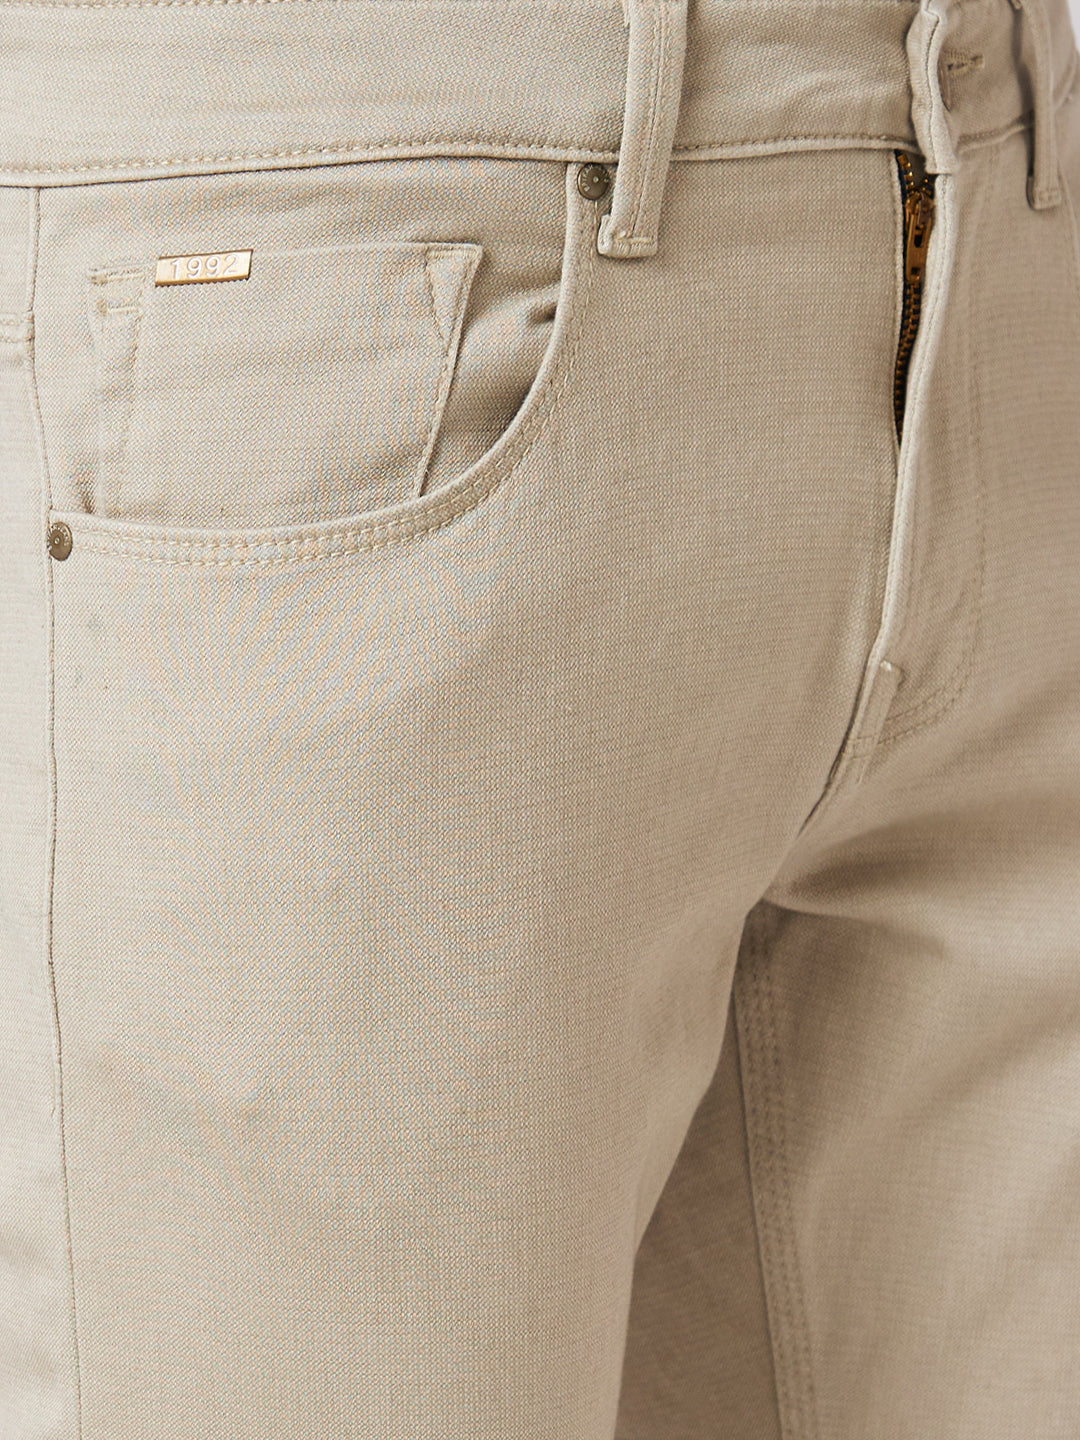 Spykar Low Rise Skinny Fit Grey Jeans For Men